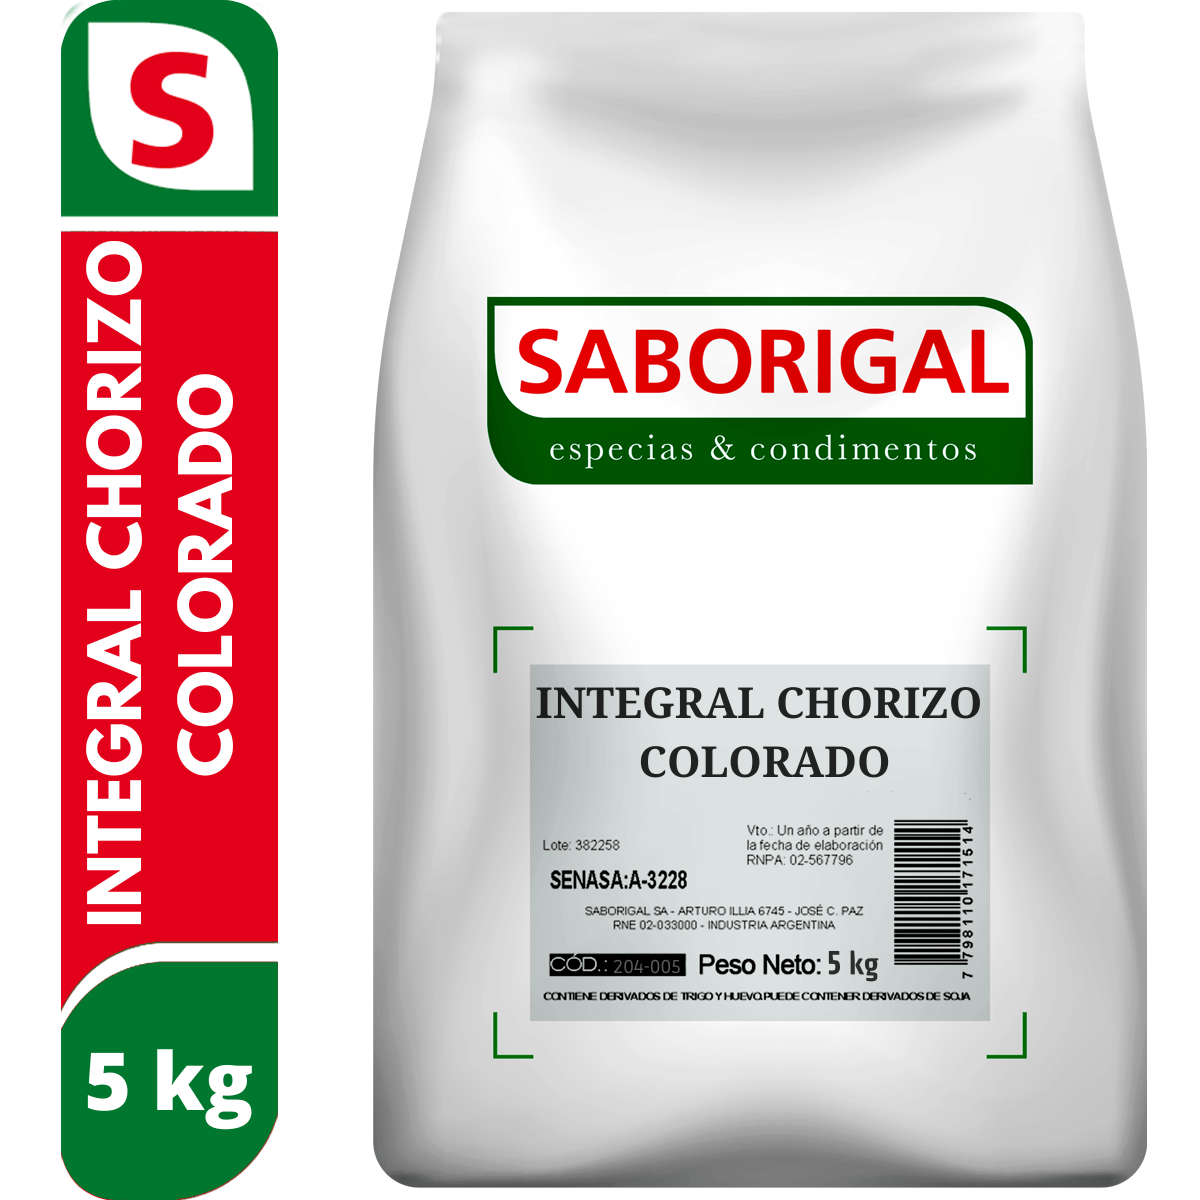 Integral chorizo colorado 5 kg